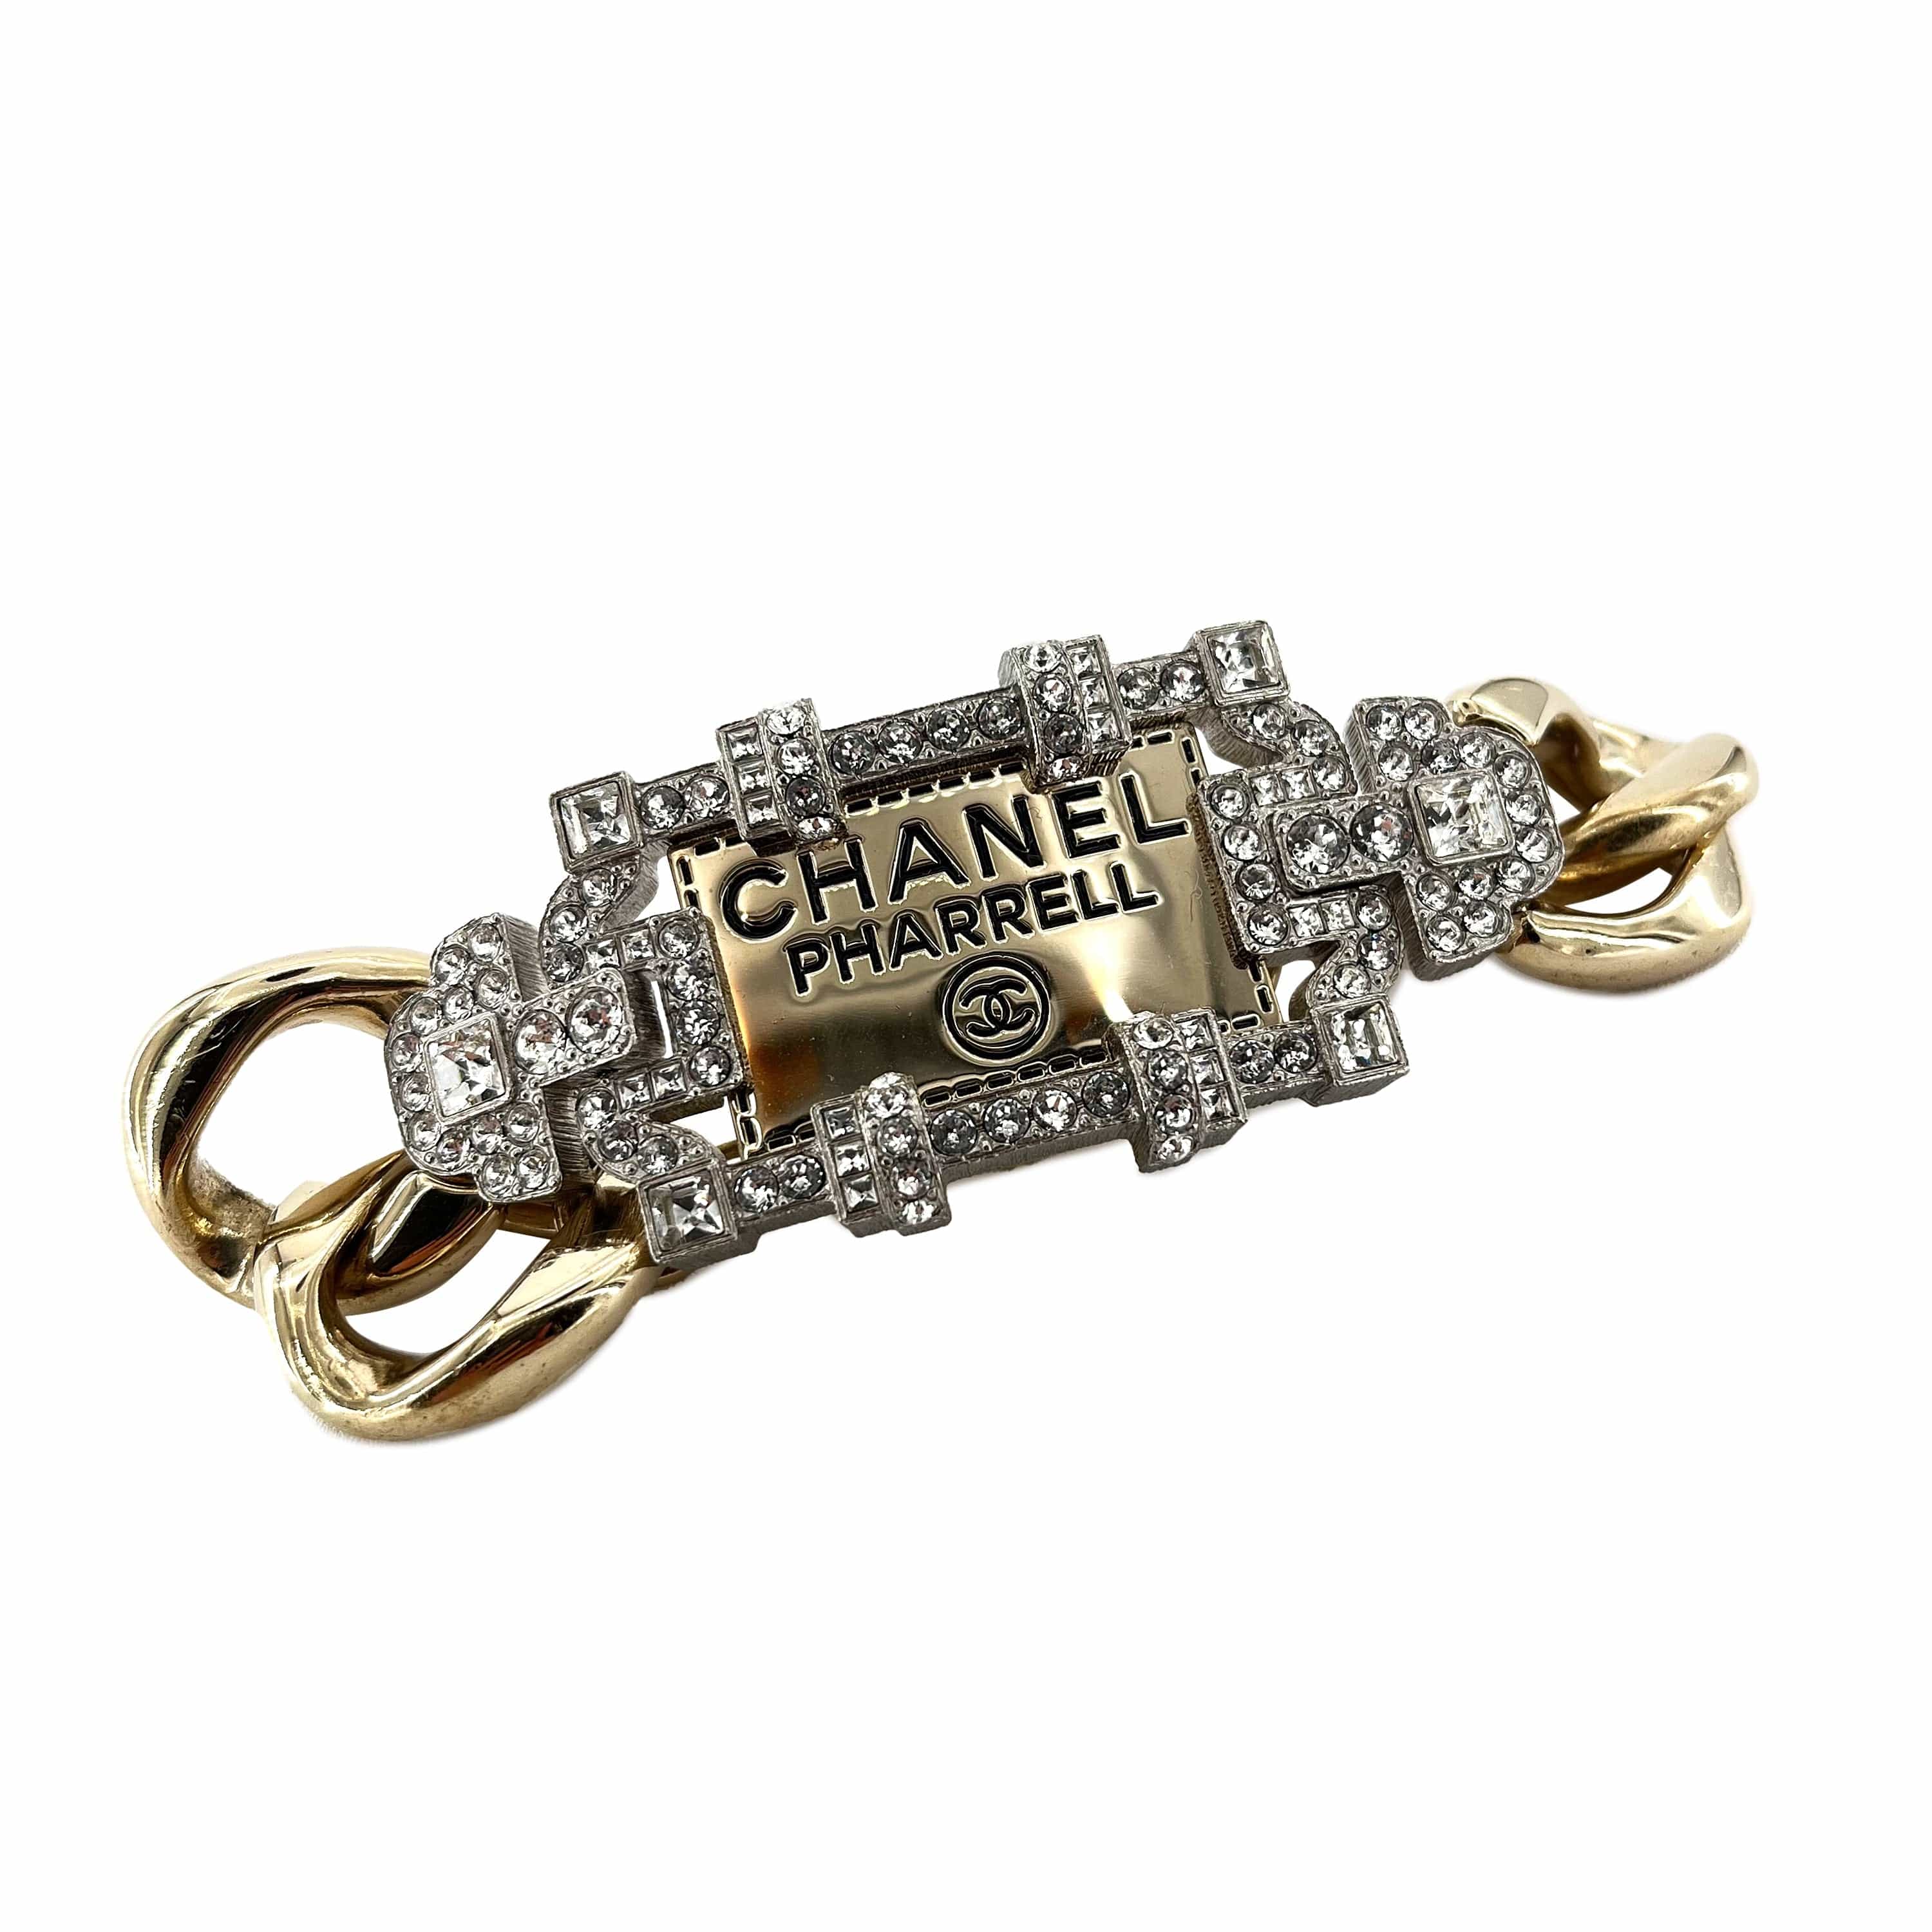 Chanel Chanel x Pharrell Rhinestone Plate Cuban Link Bracelet LGHW 2019